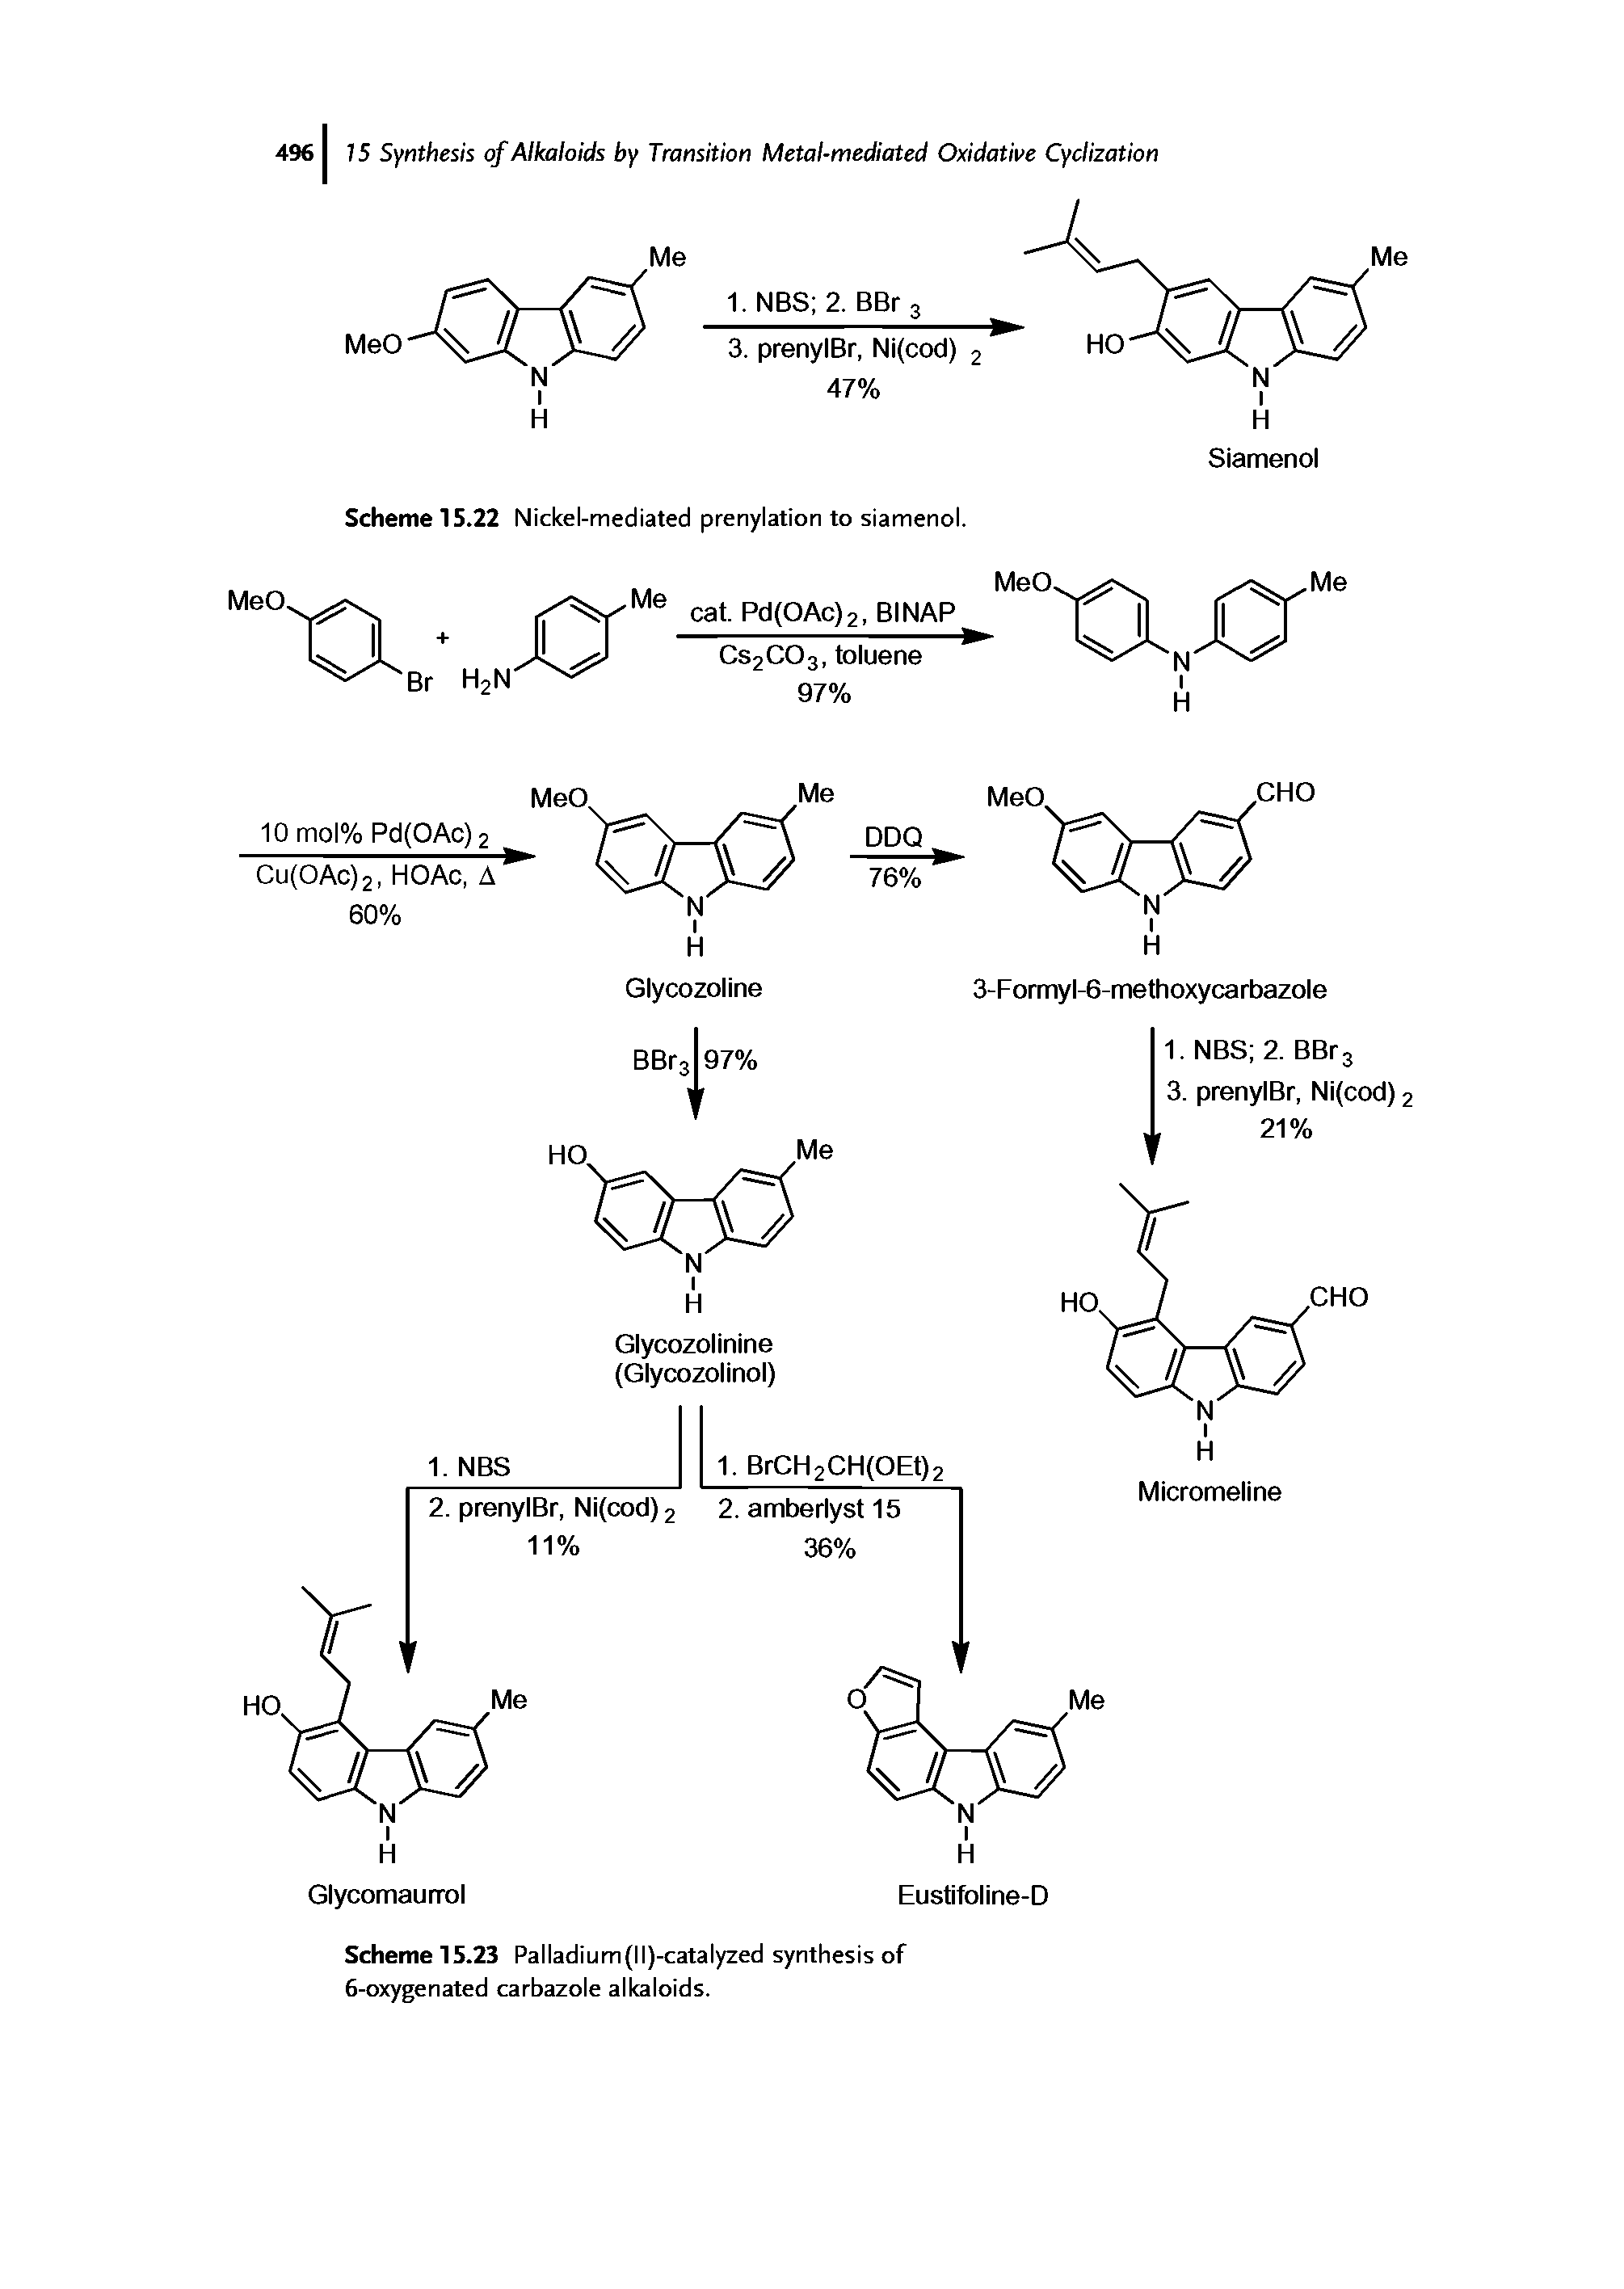 Scheme 15.23 Palladium(ll)-catalyzed synthesis of 6-oxygenated carbazole alkaloids.